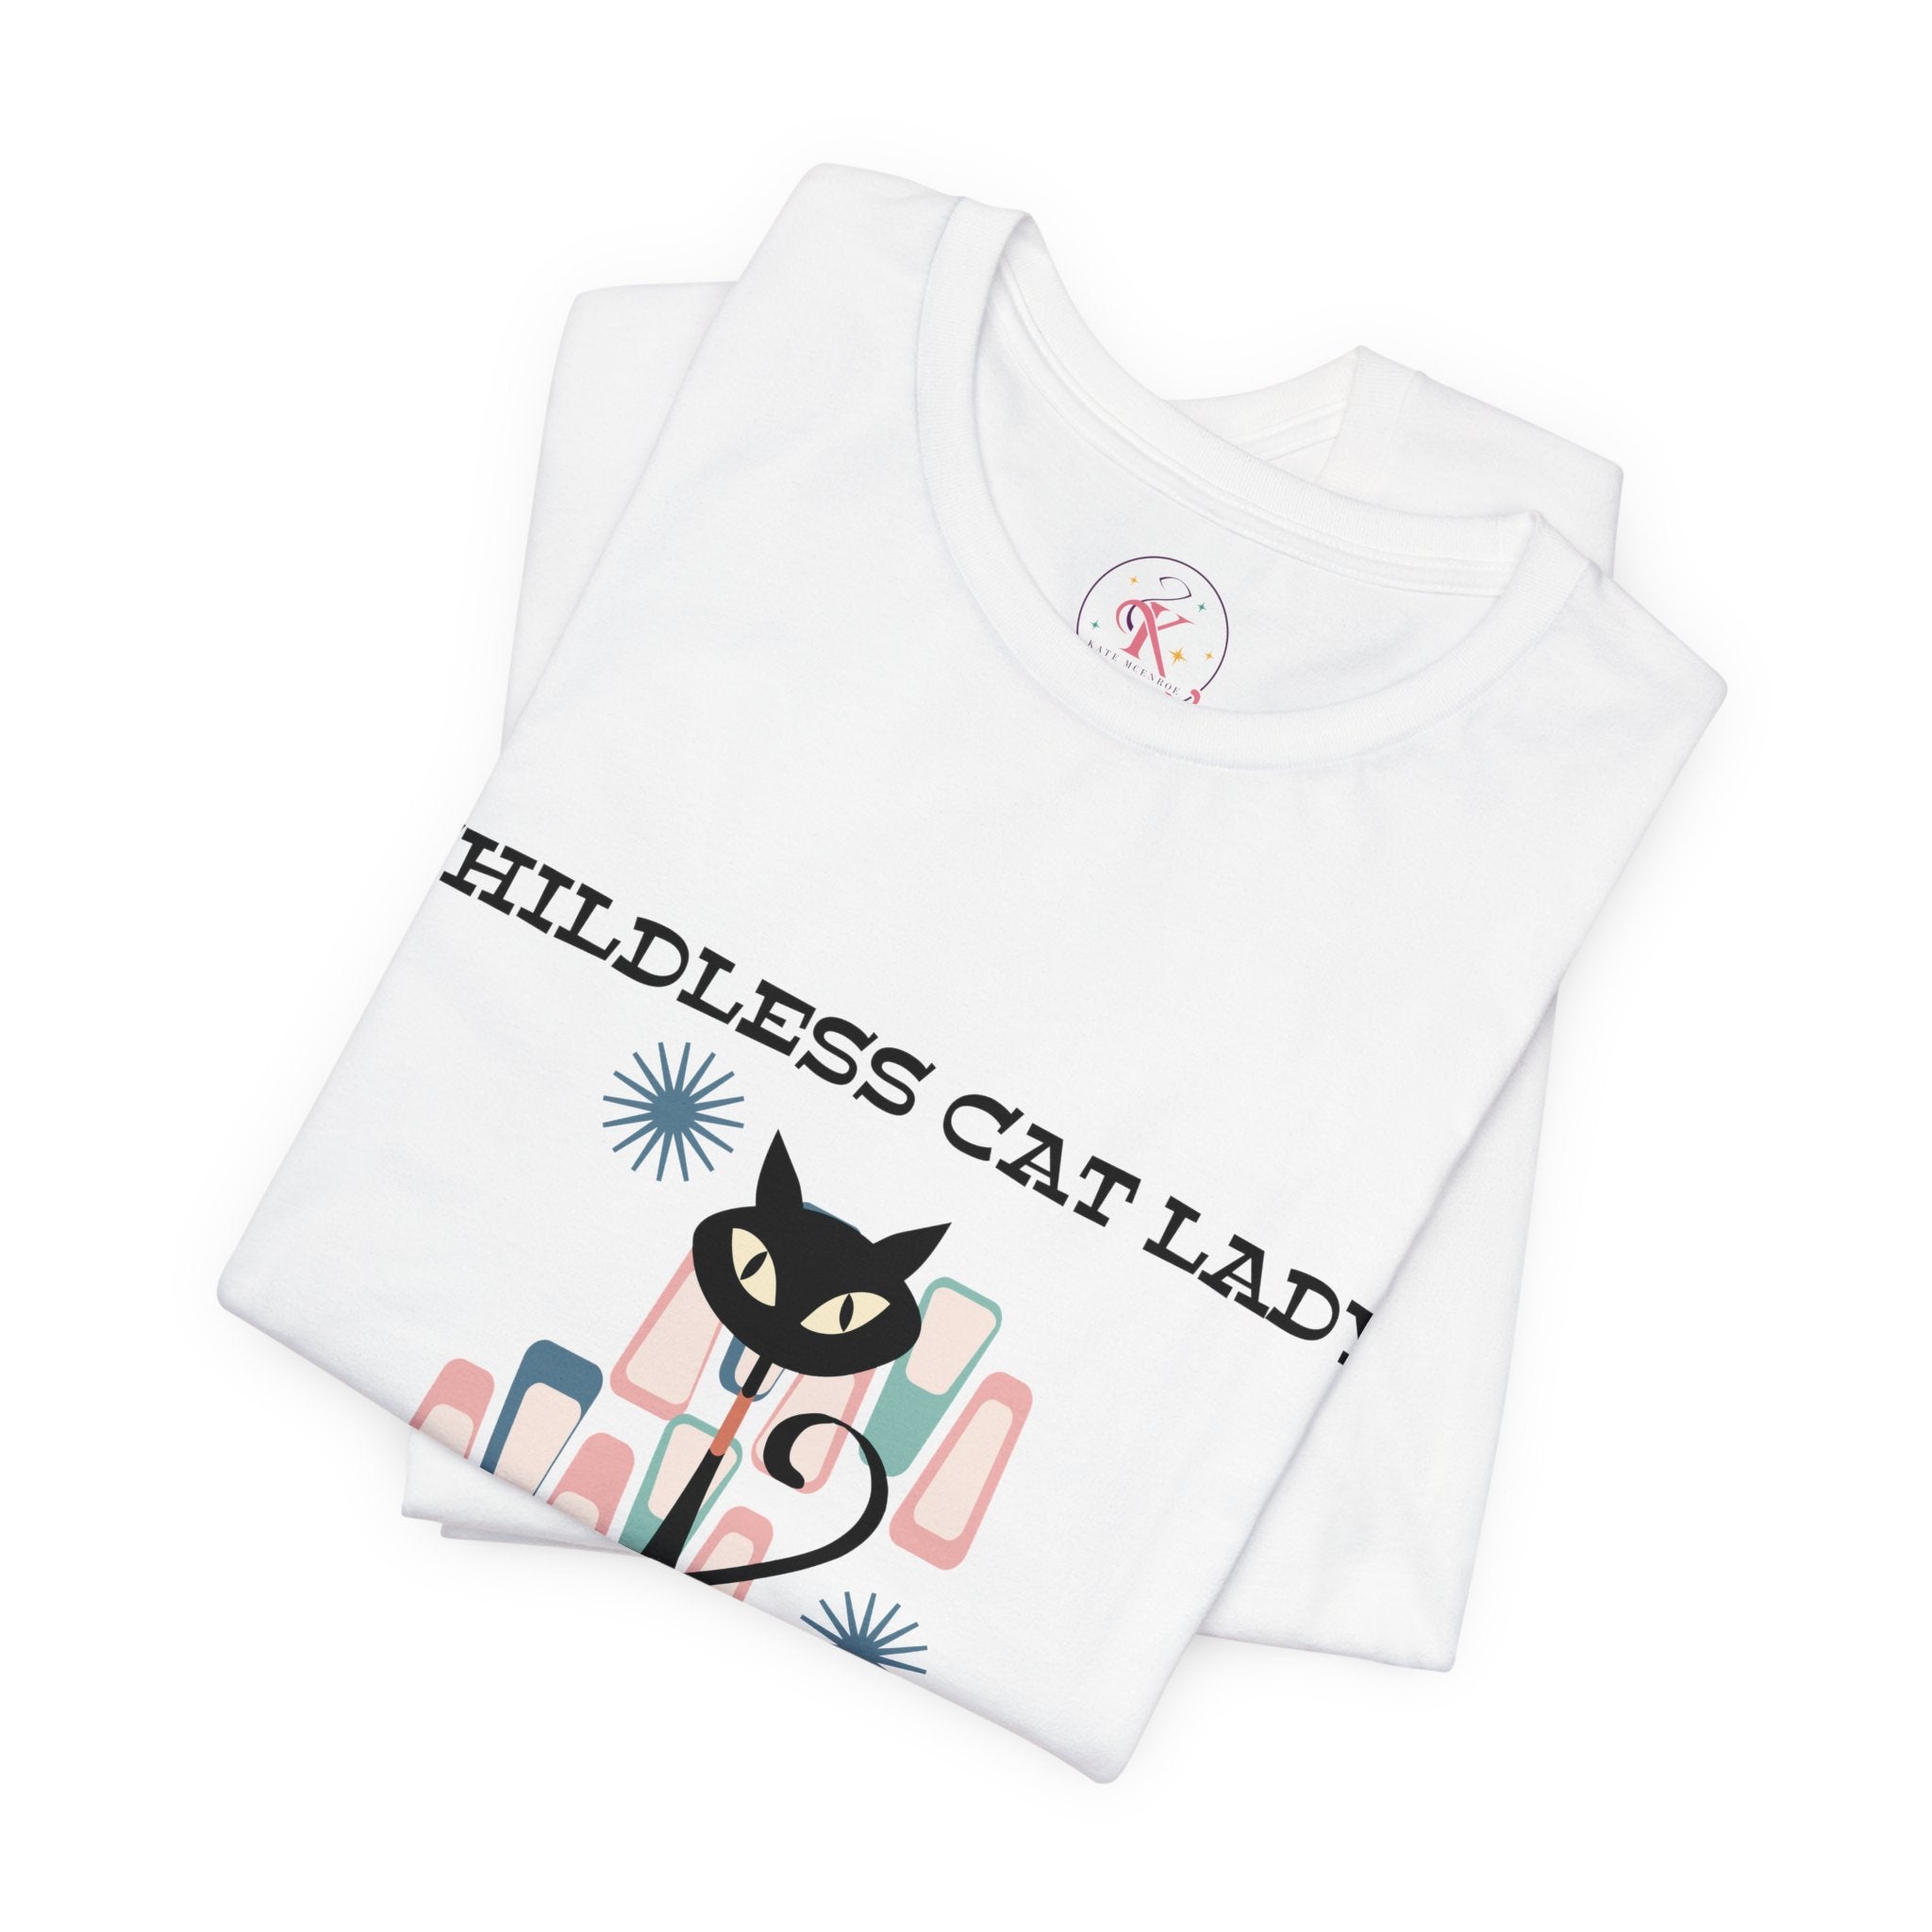 Kate McEnroe New York Childless Cat Lady Who Votes T - Shirt, Retro Atomic Kitschy Cat TeeT - Shirt22486484330229175952